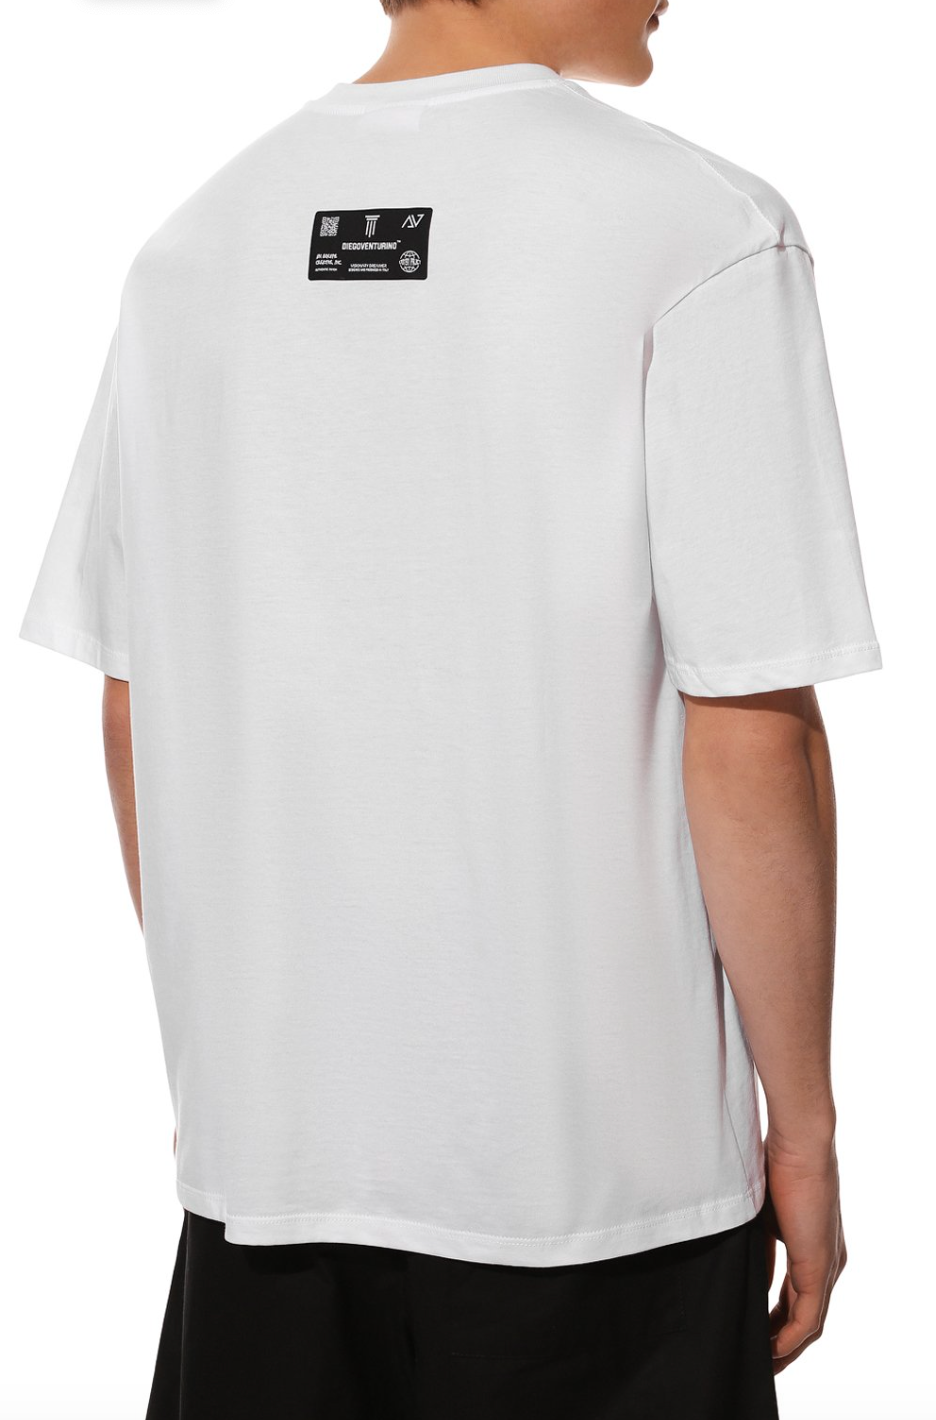 Diego Venturino White Cotton T-Shirt